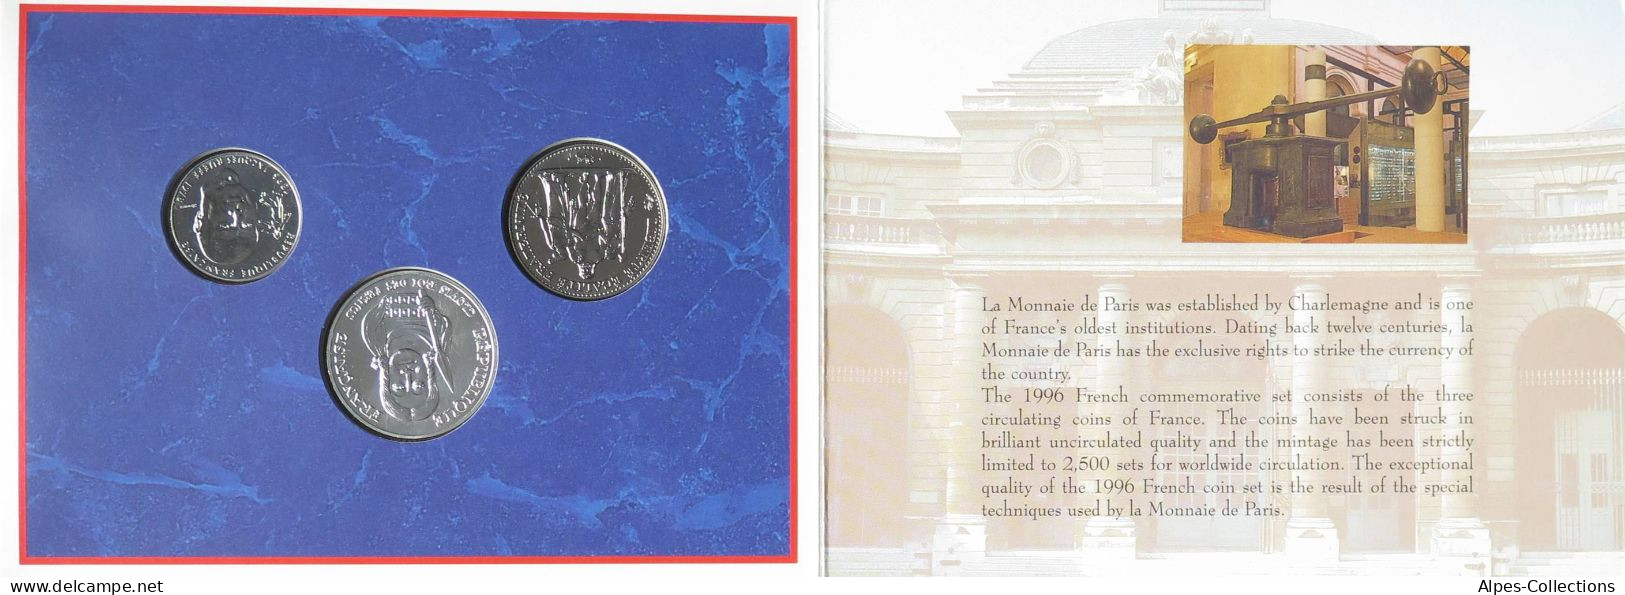 F5200.15 - COFFRET BU - 1996 - 1 Franc, 5 Francs Et 100 Francs - BU, BE & Coffrets